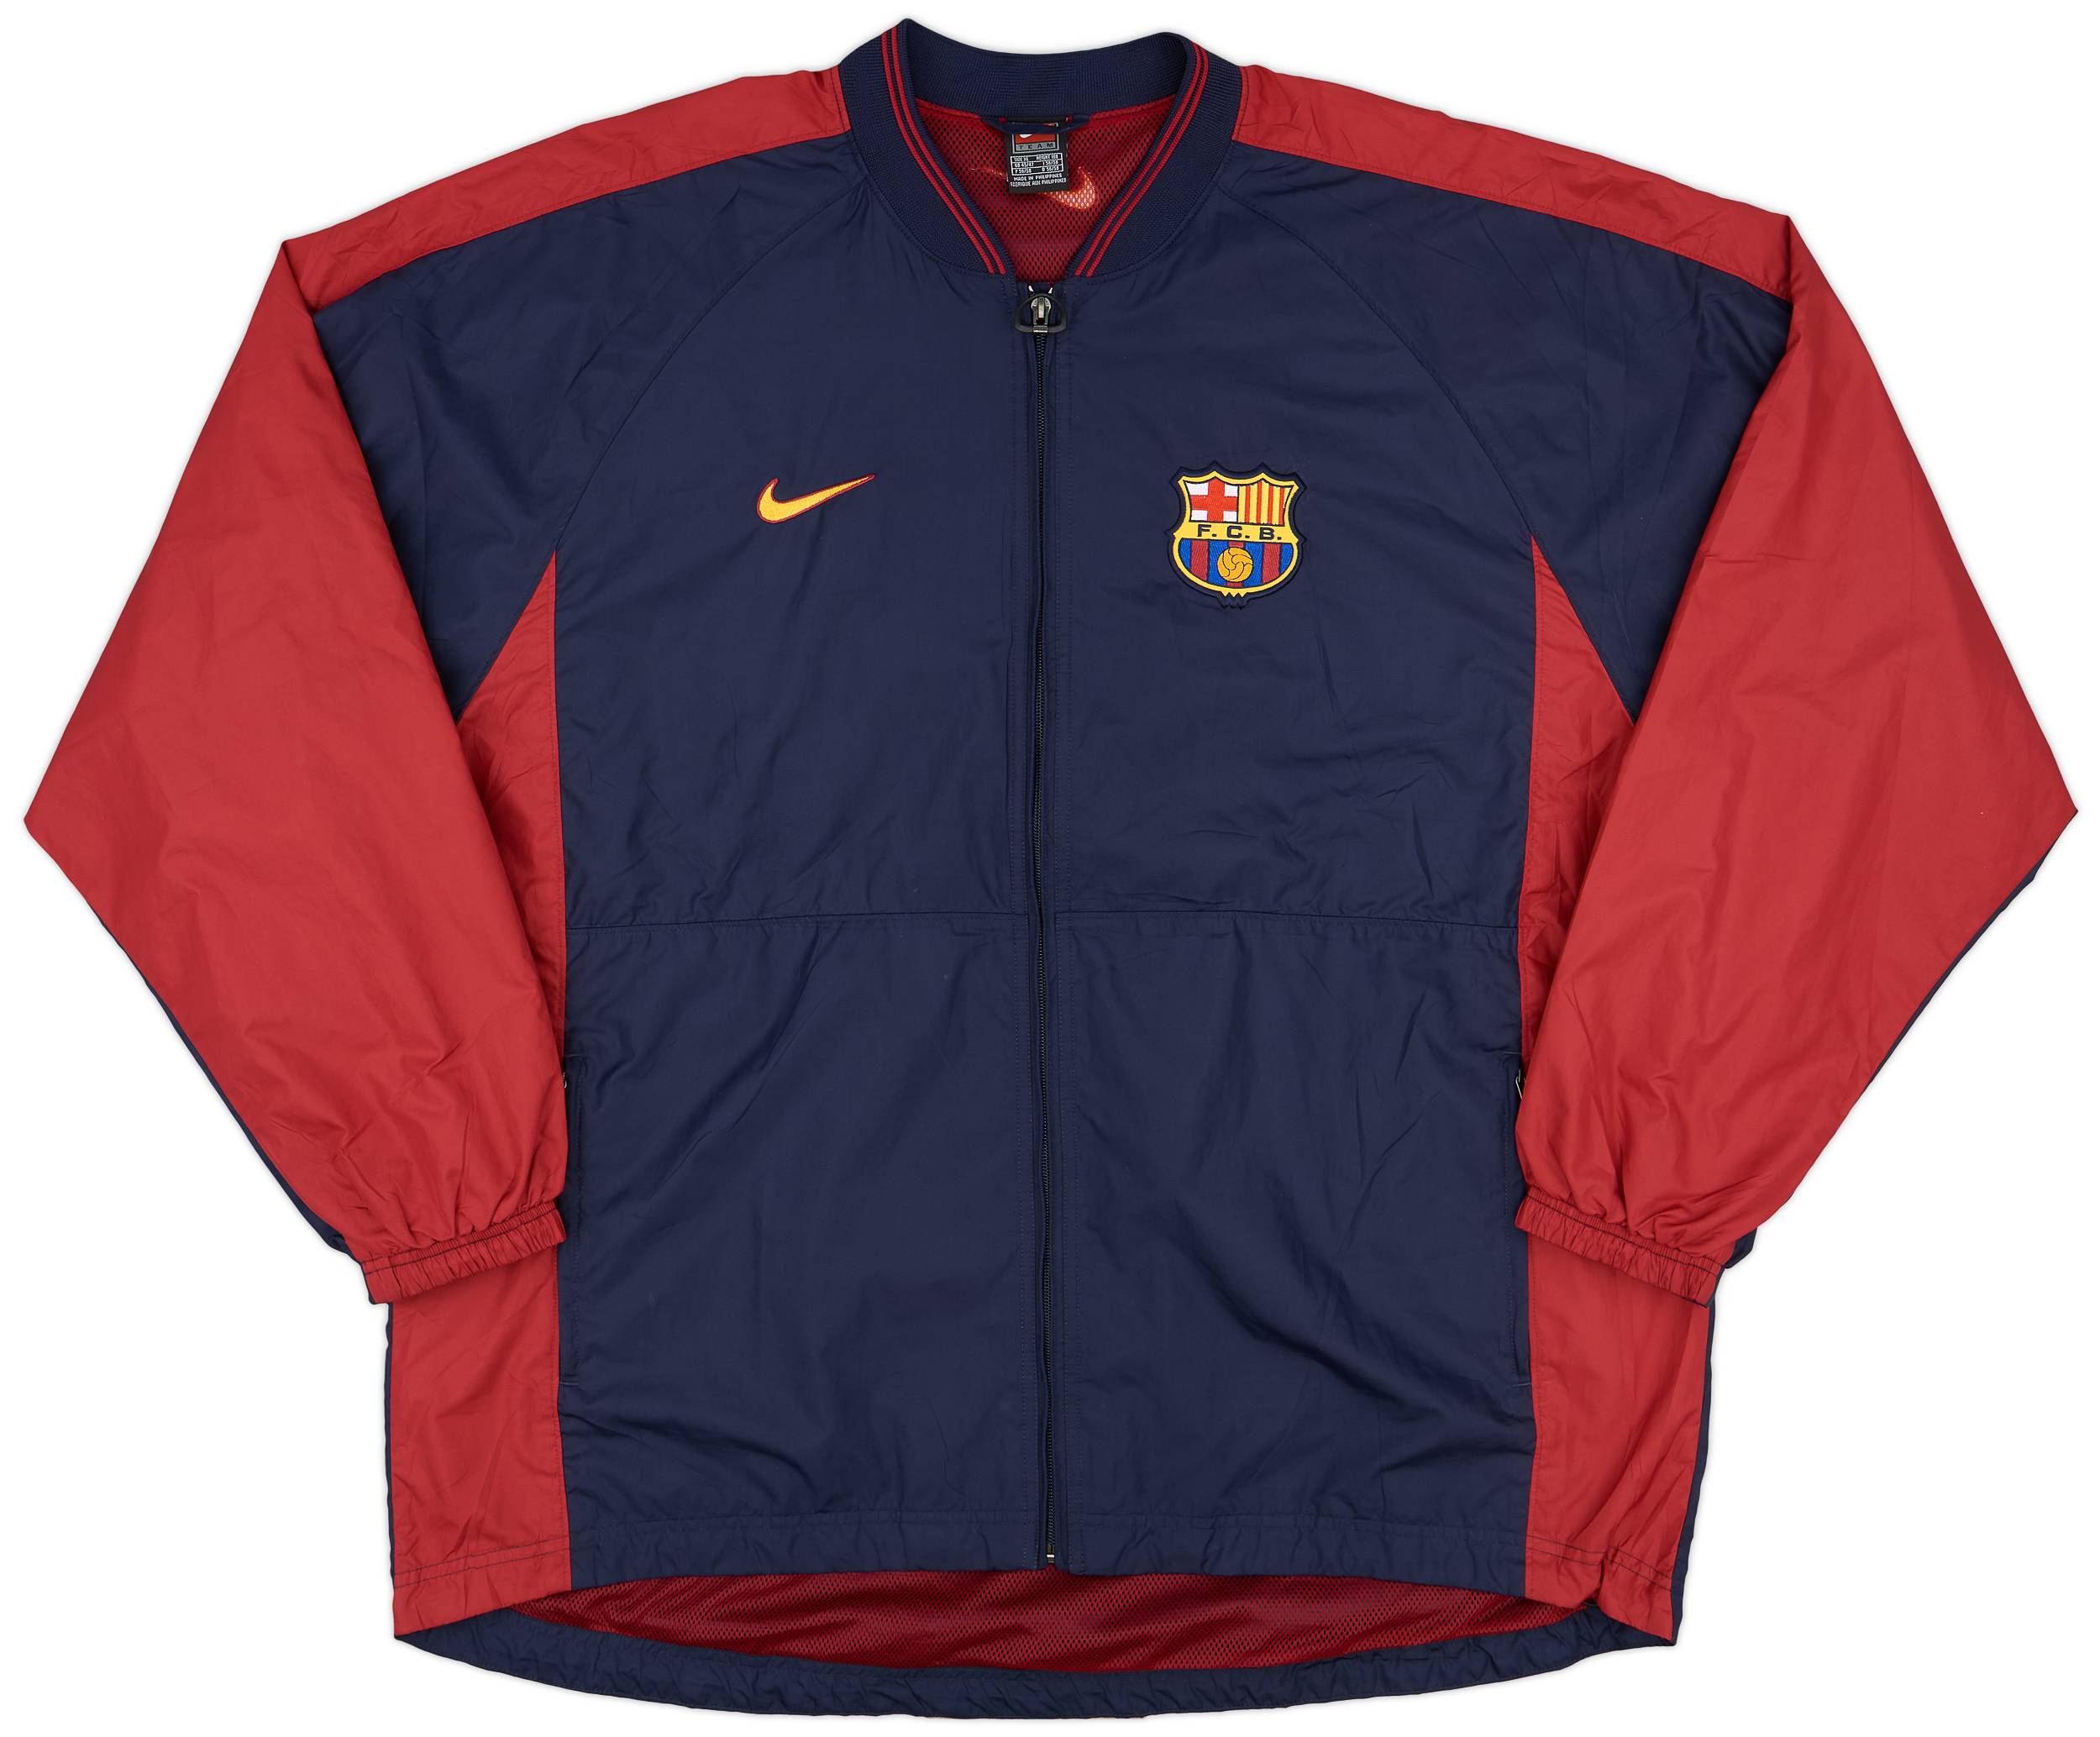 2002-03 Barcelona Nike Track Jacket - 9/10 - (XL)